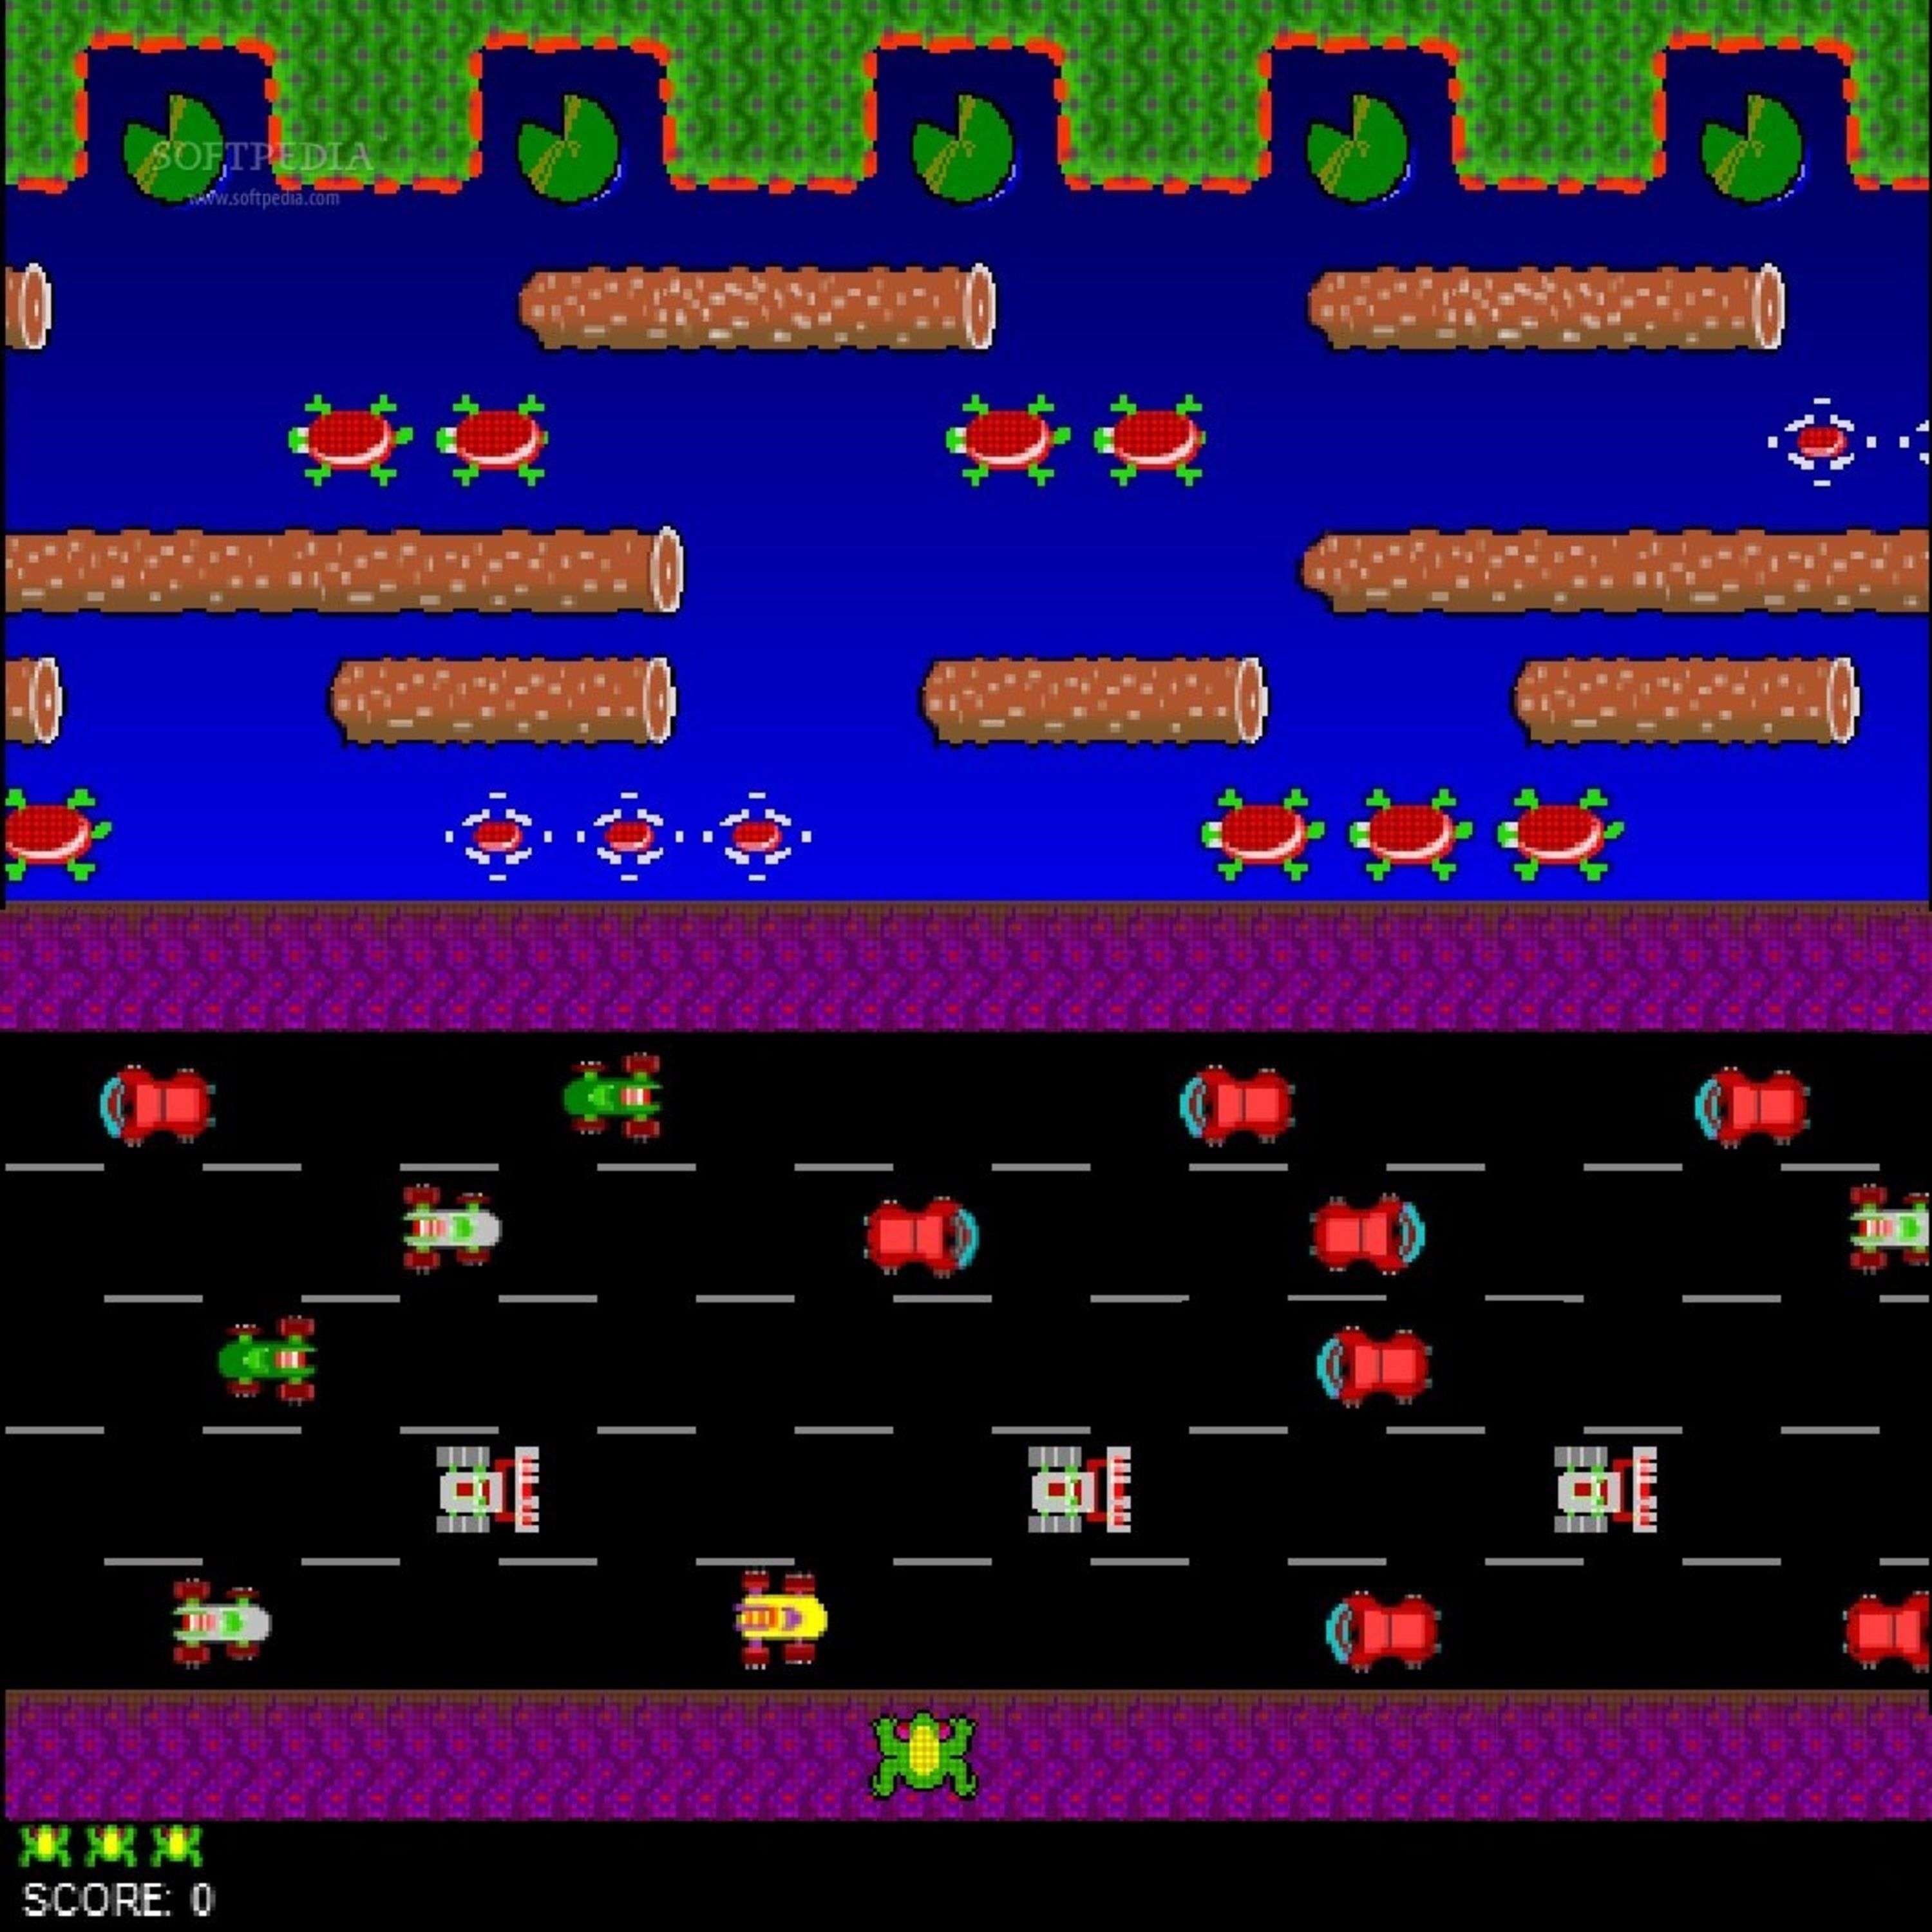 023 - That 1981 arcade game